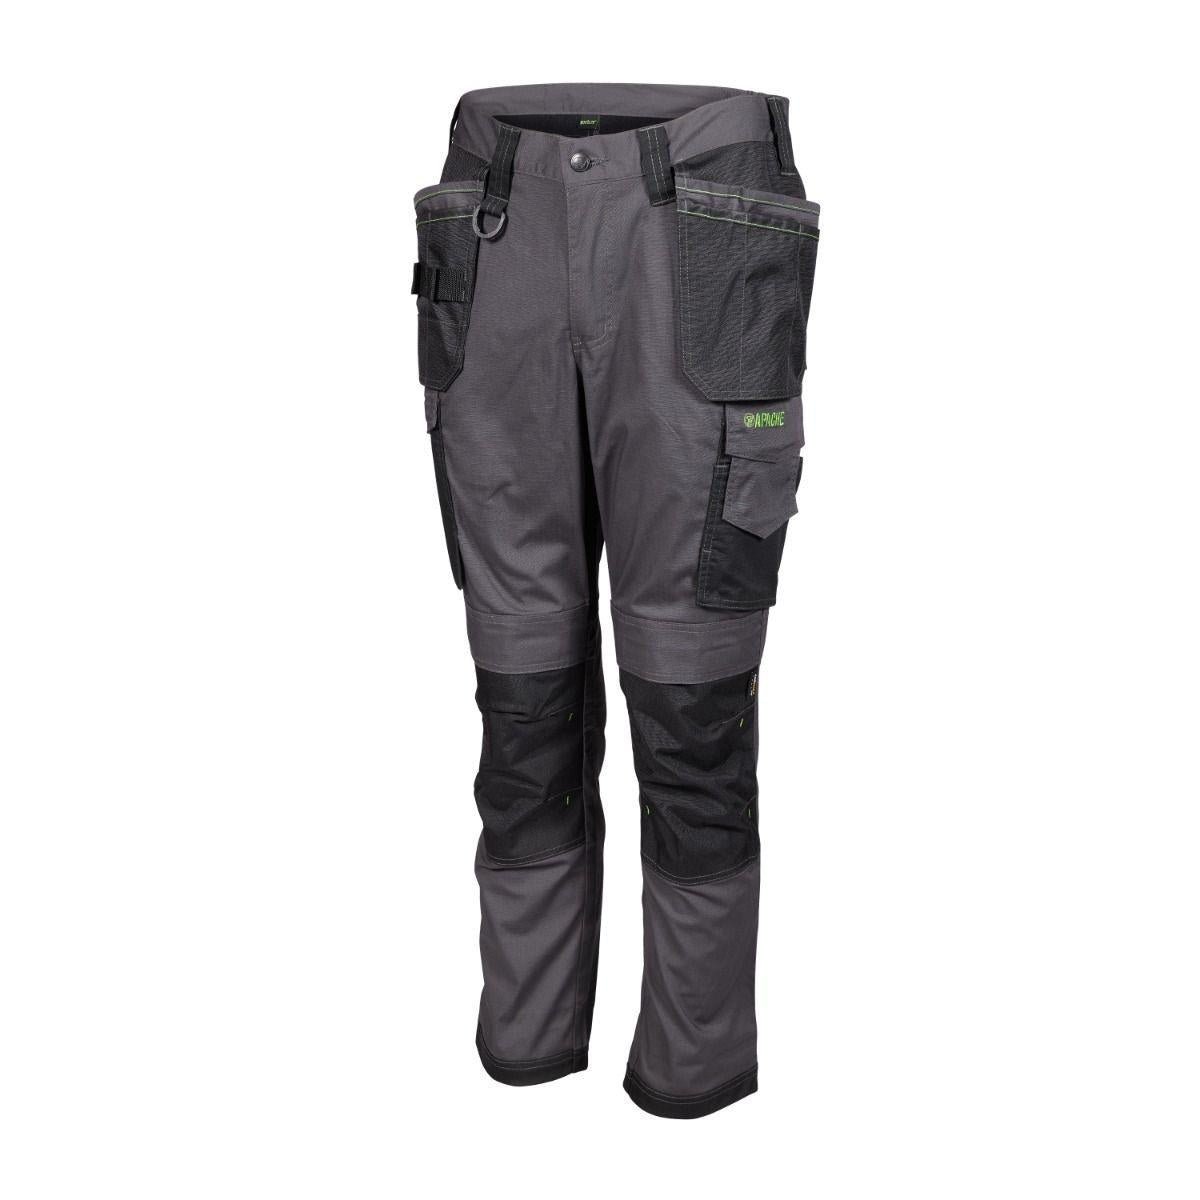 Apache Sudbury grey/black cargo multi pocket stretch slim fit work trousers